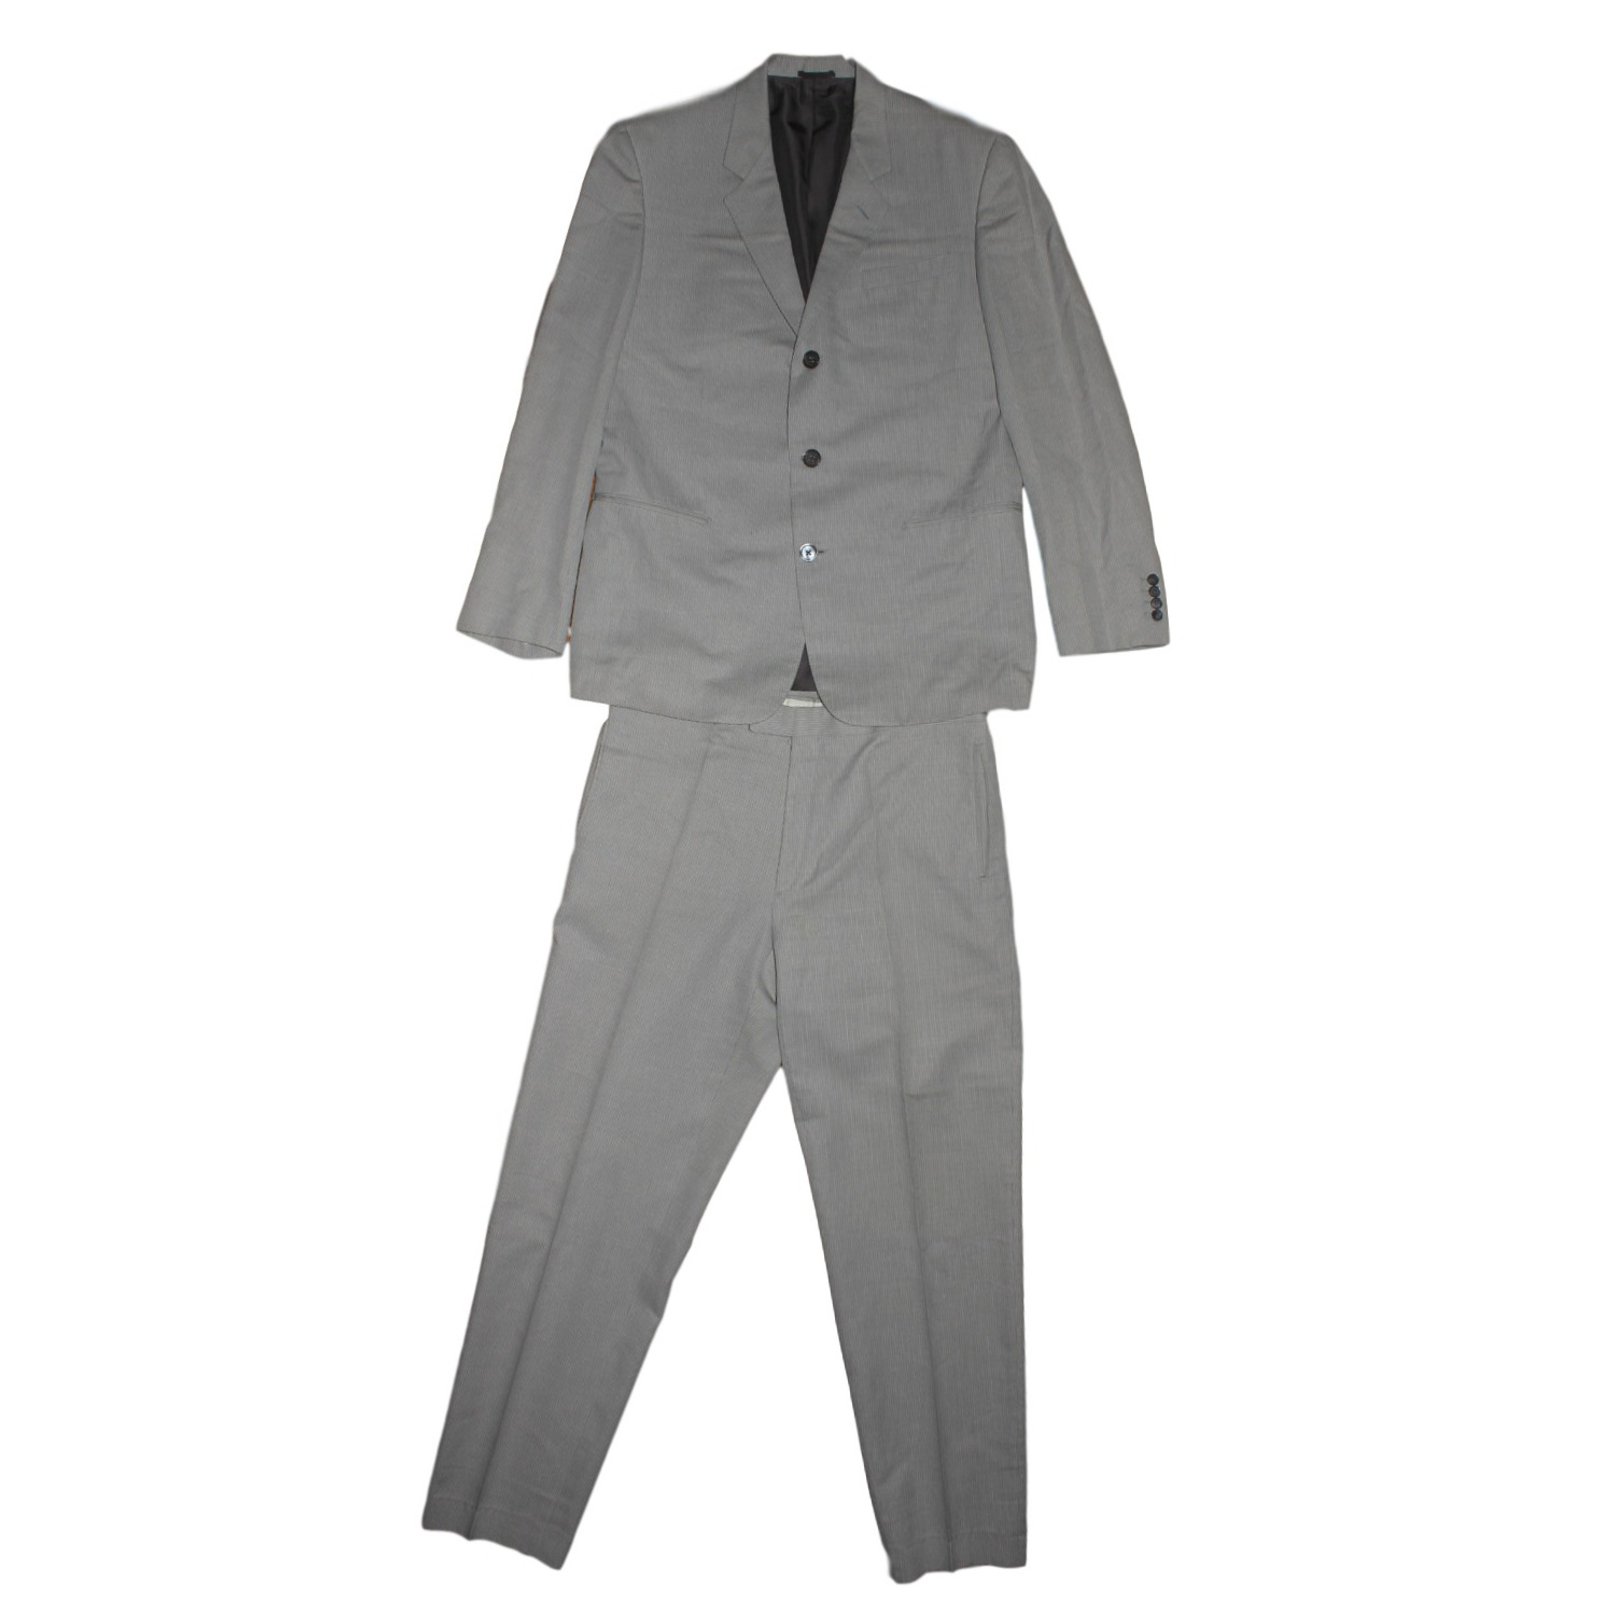 Louis Vuitton Suit - Grey Suiting, Clothing - 0LV20859